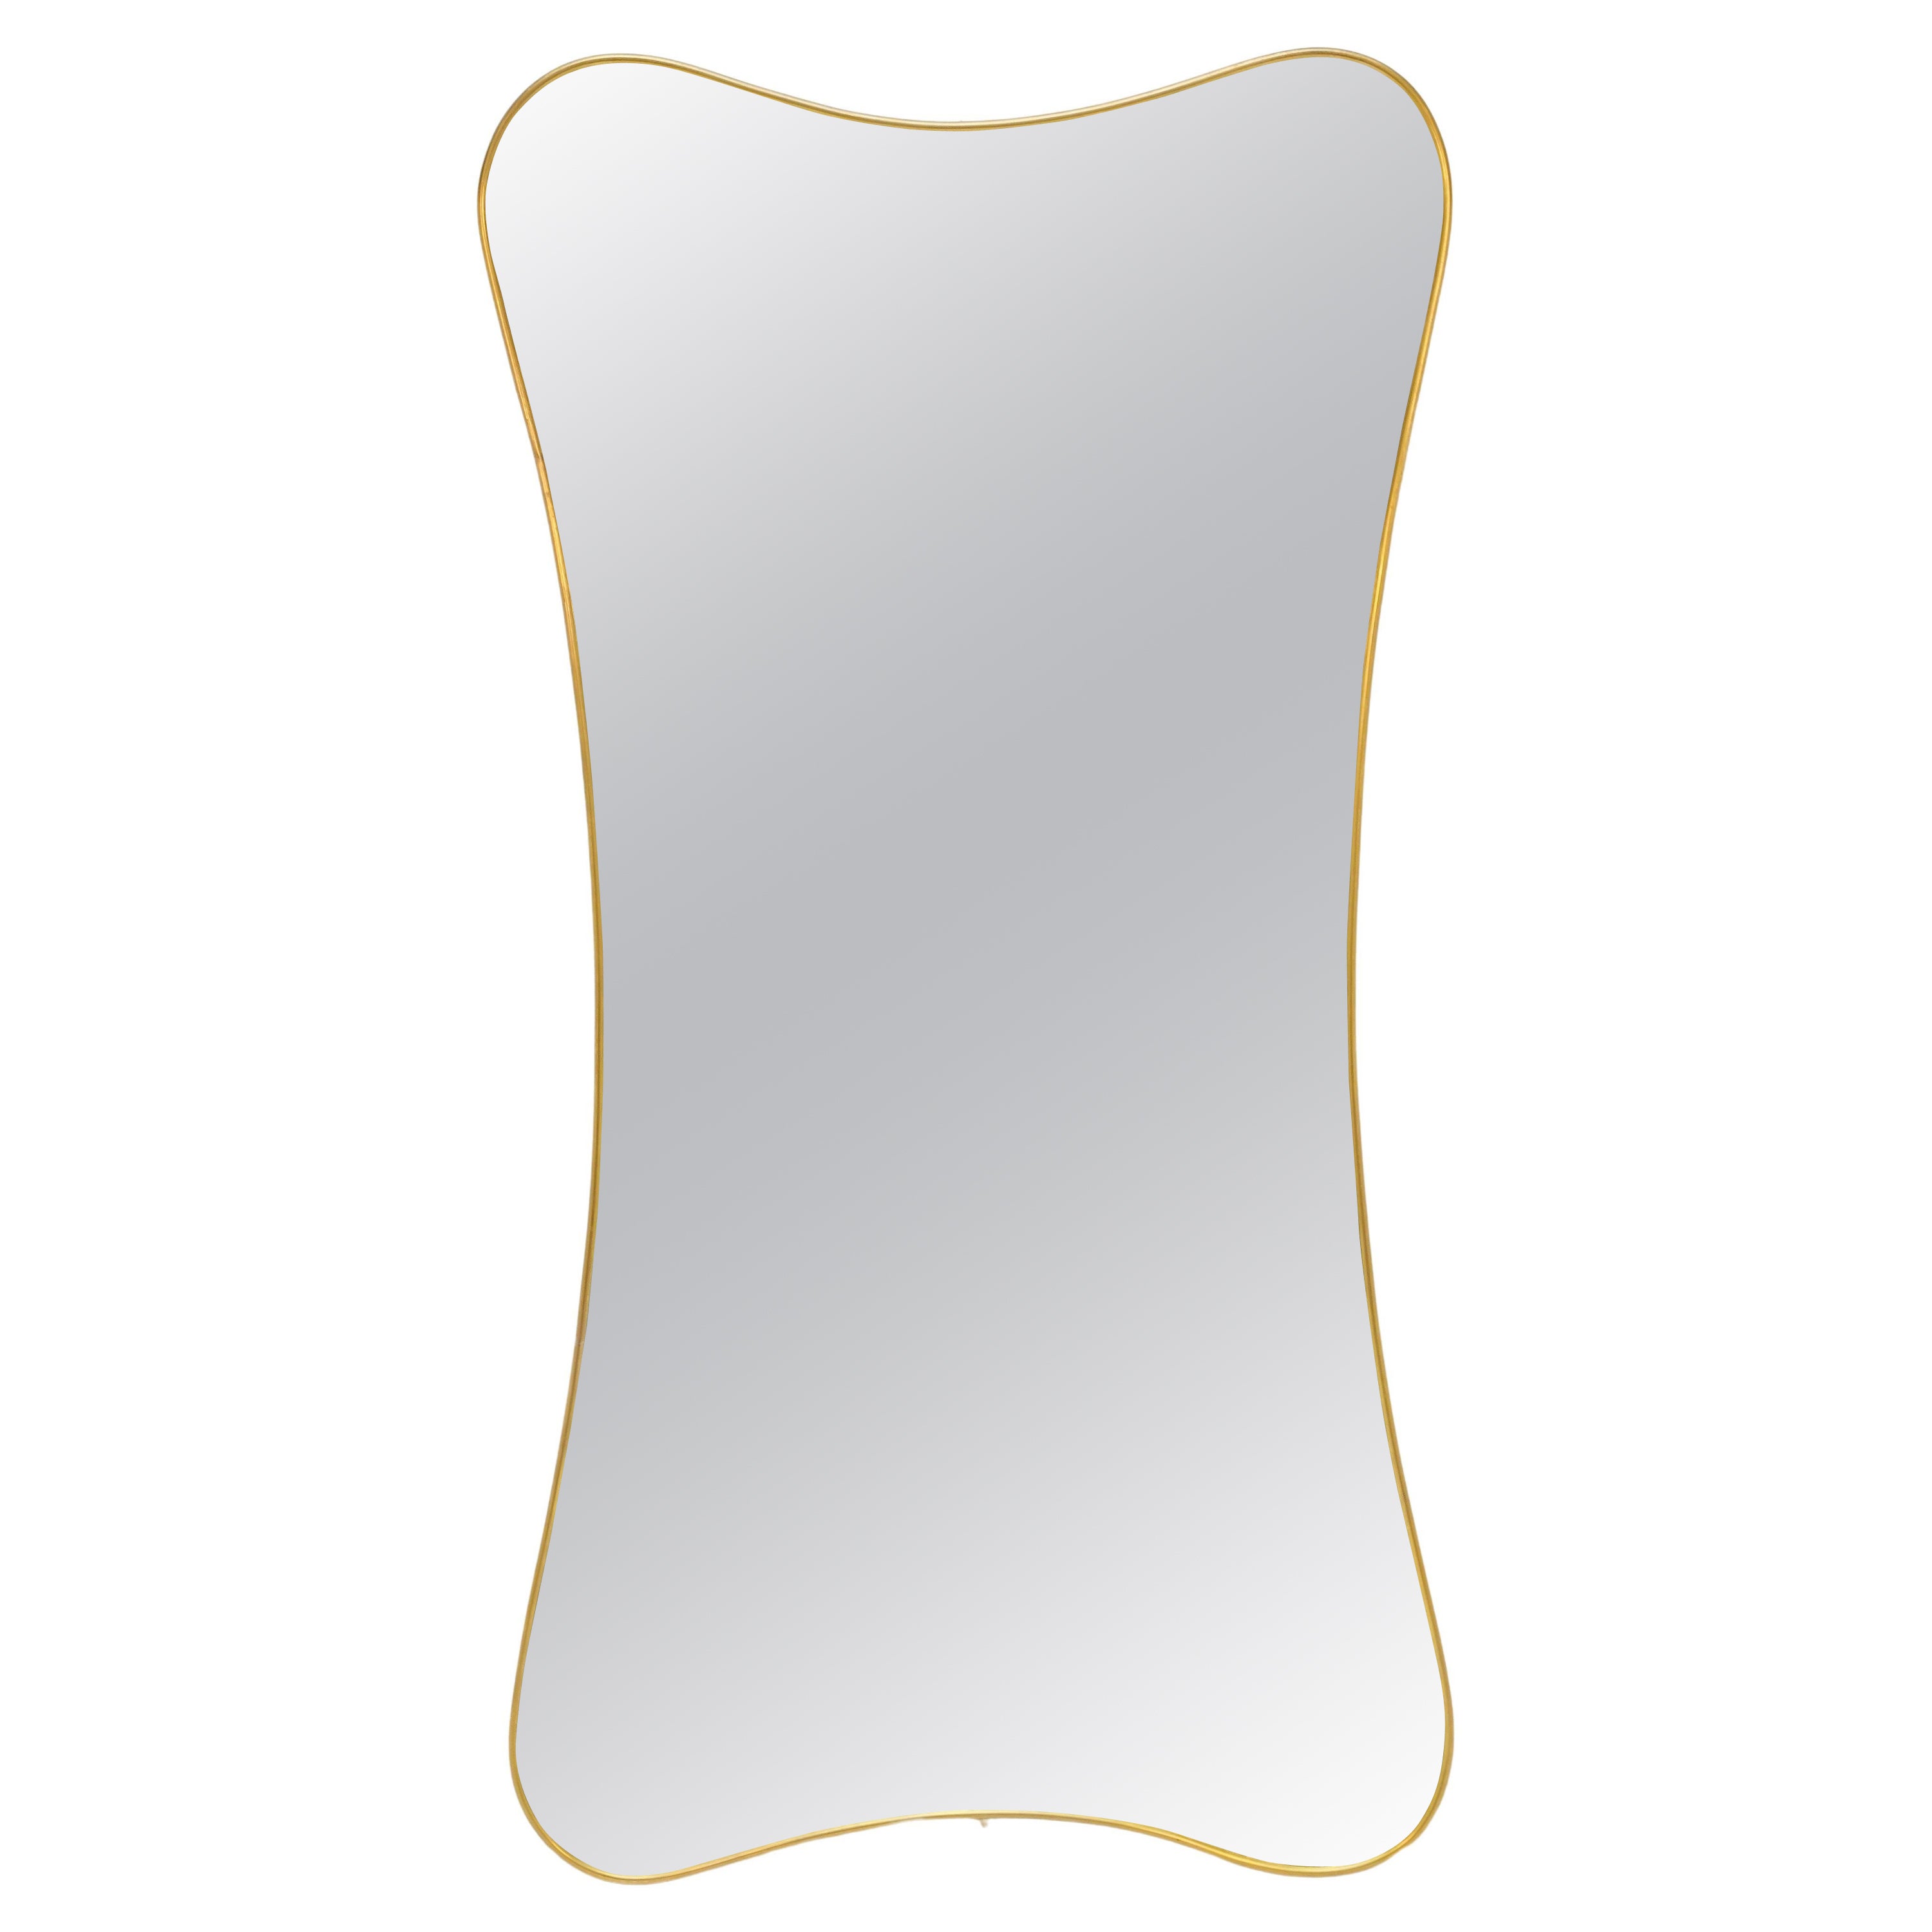 Italian Modern Gio Ponti Style Wall Mirror in Brass Frame (H 48 x W 25) For Sale